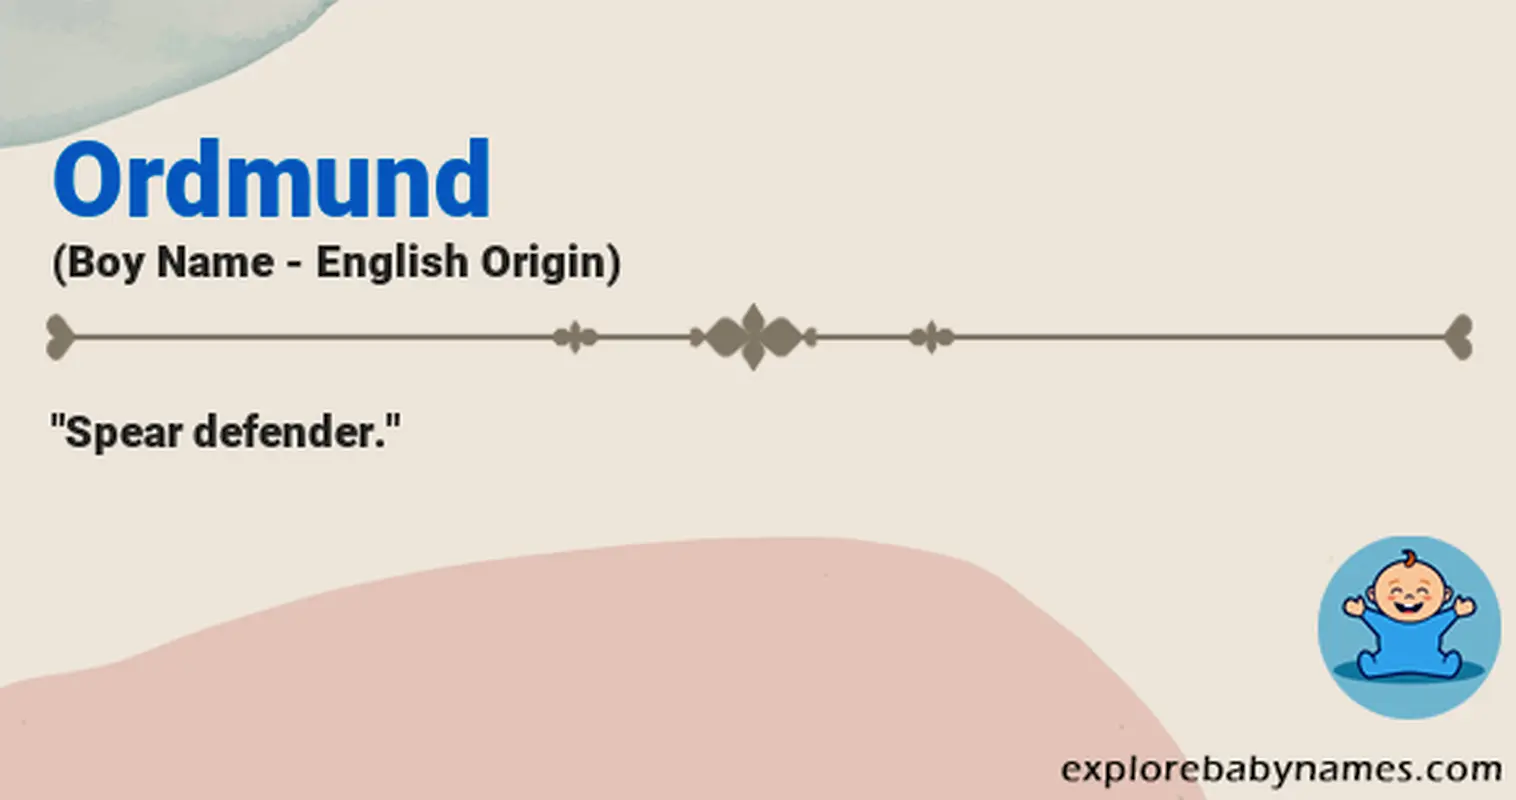 Meaning of Ordmund